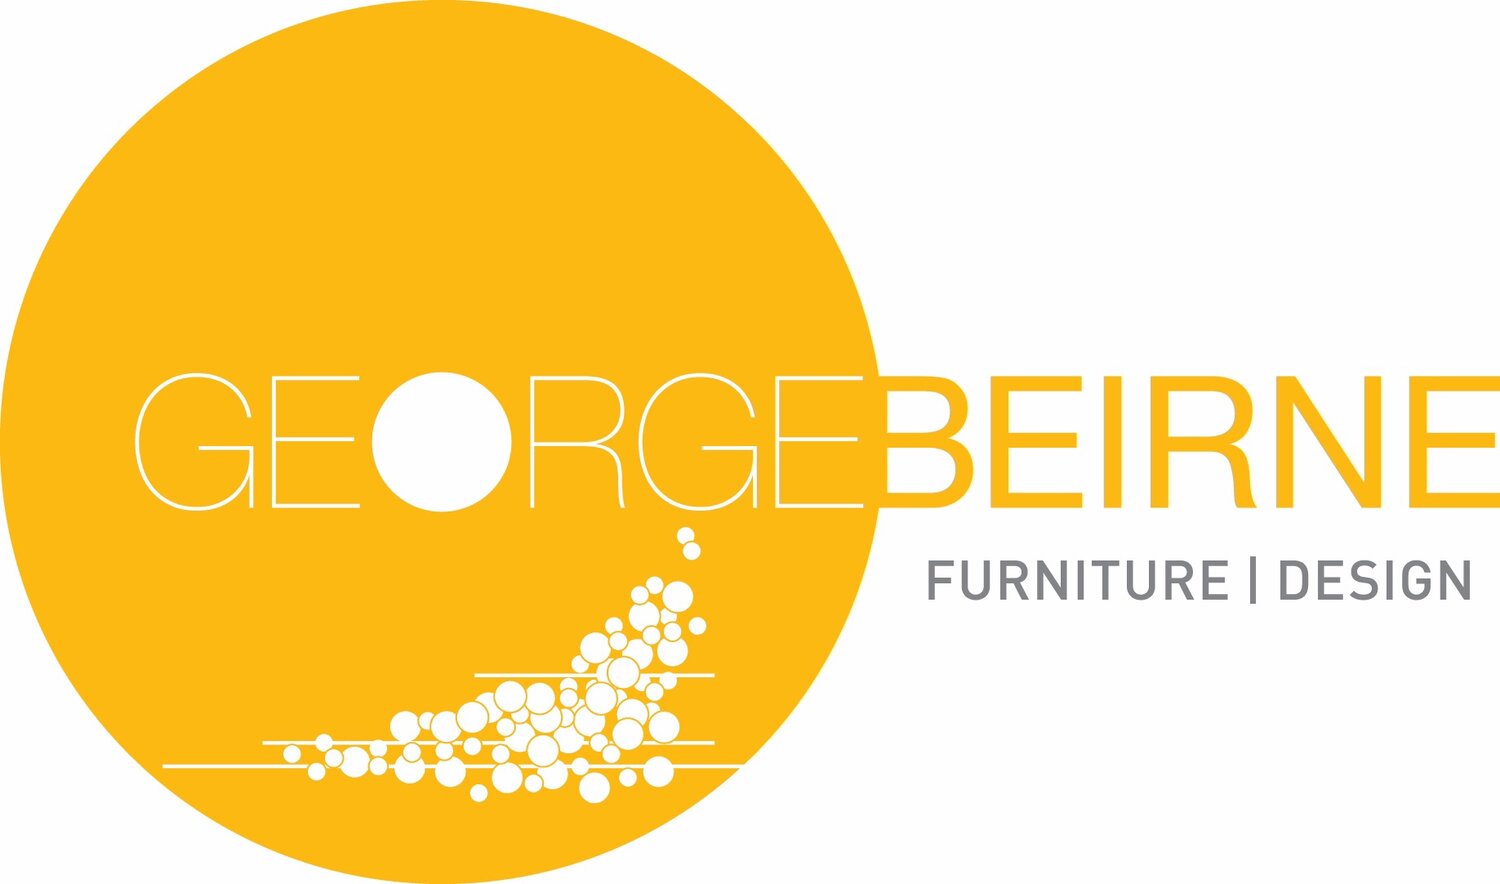 George Beirne furniture and design